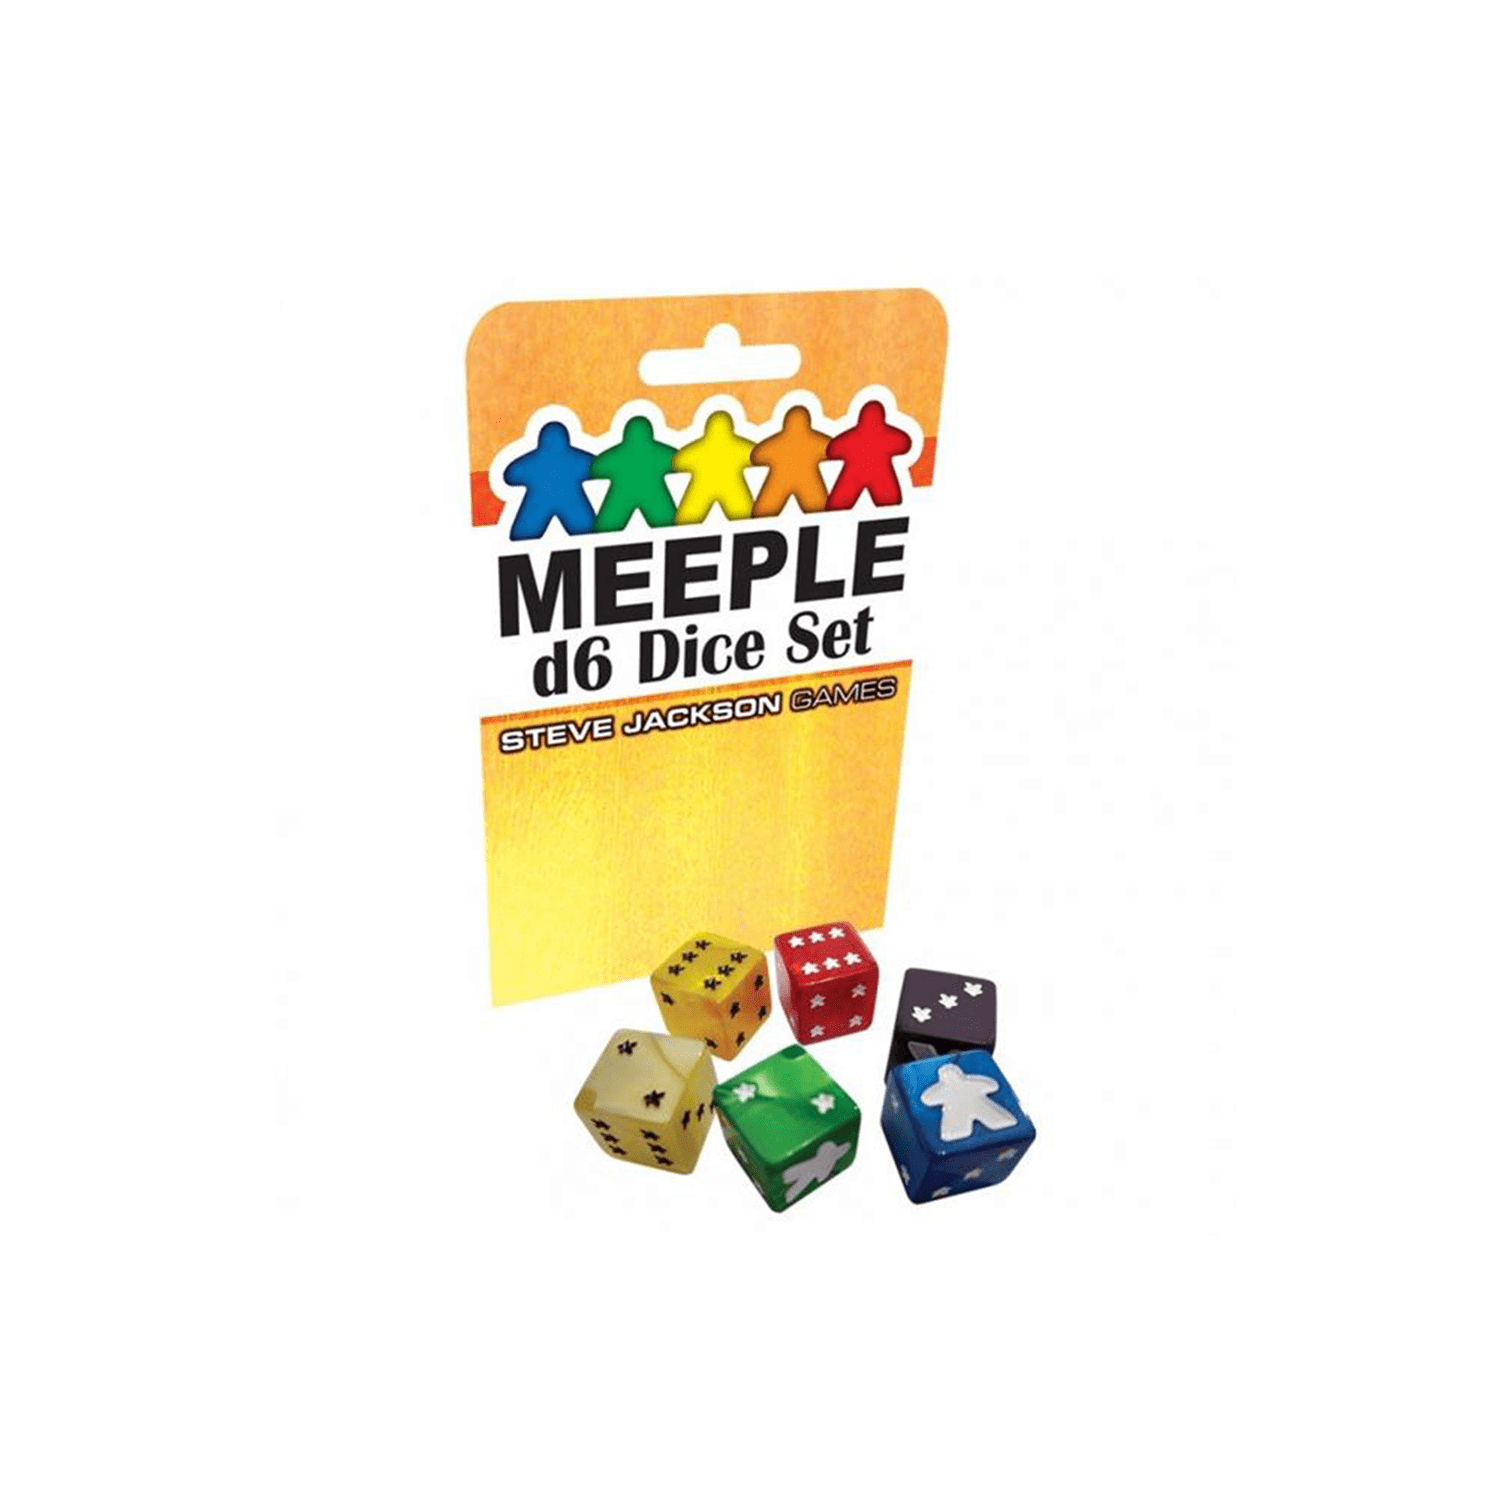 meeple-d6-dice-set